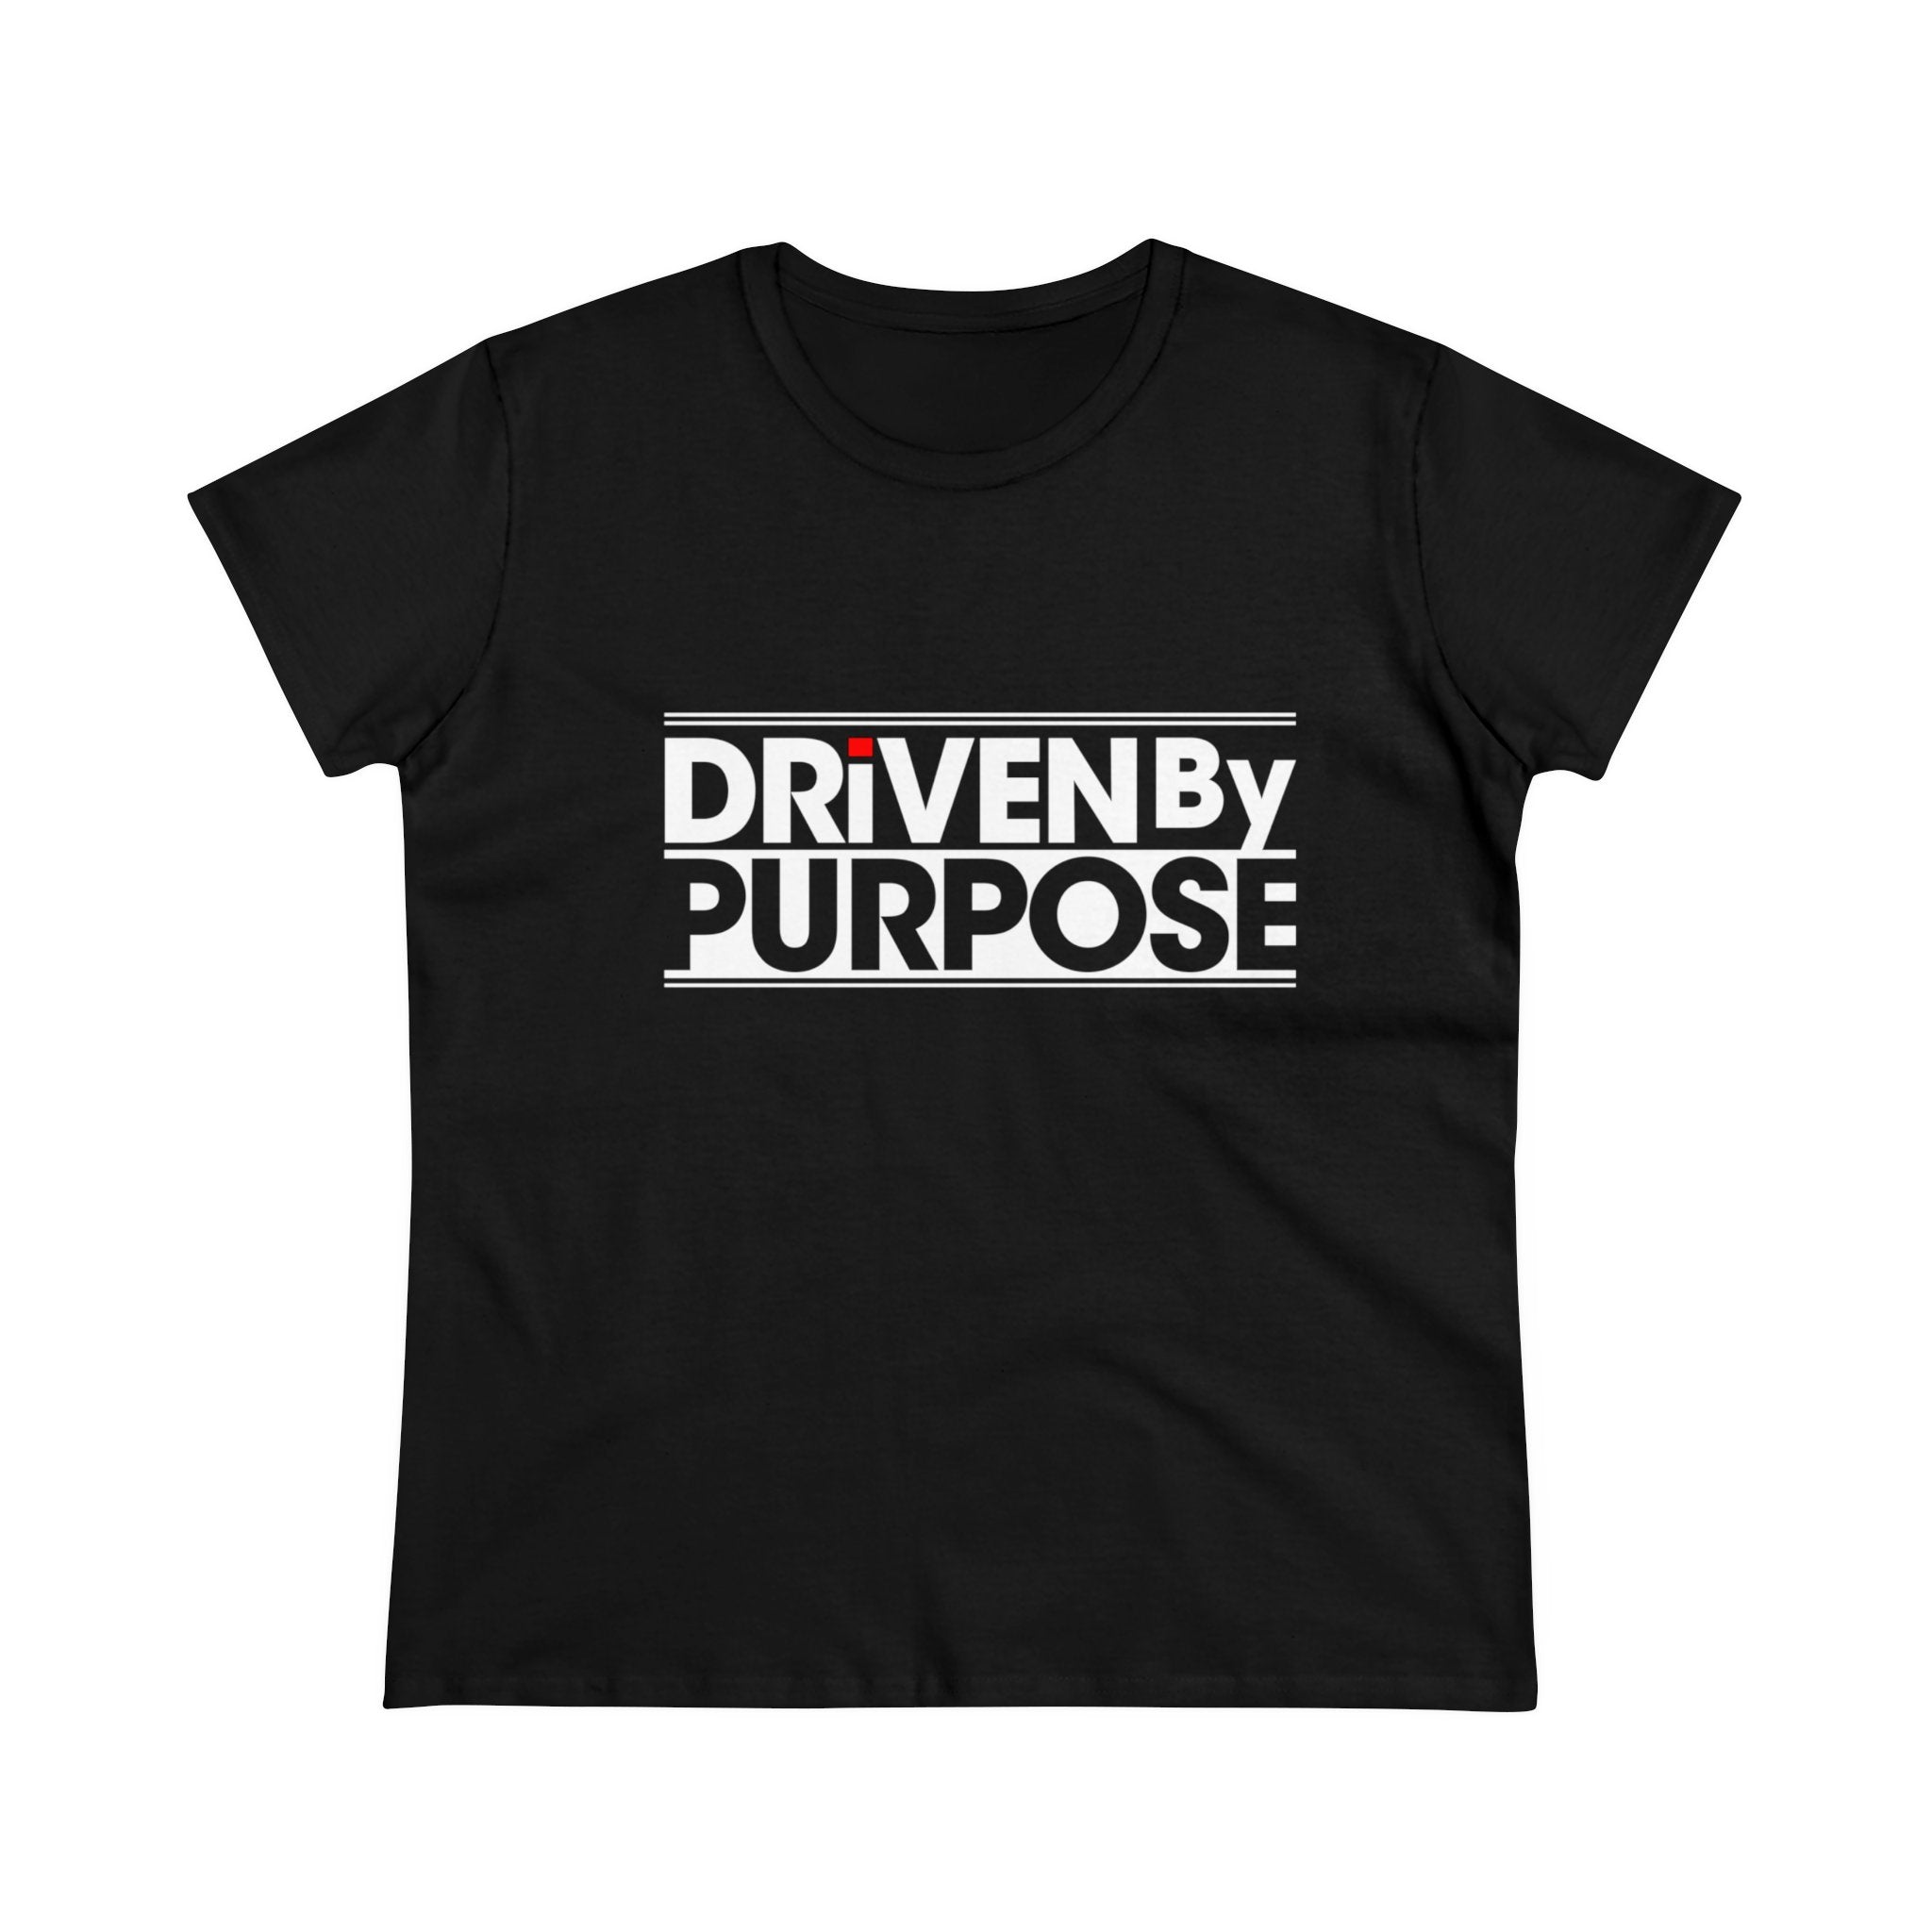 Driven by Purpose - Women'sTee